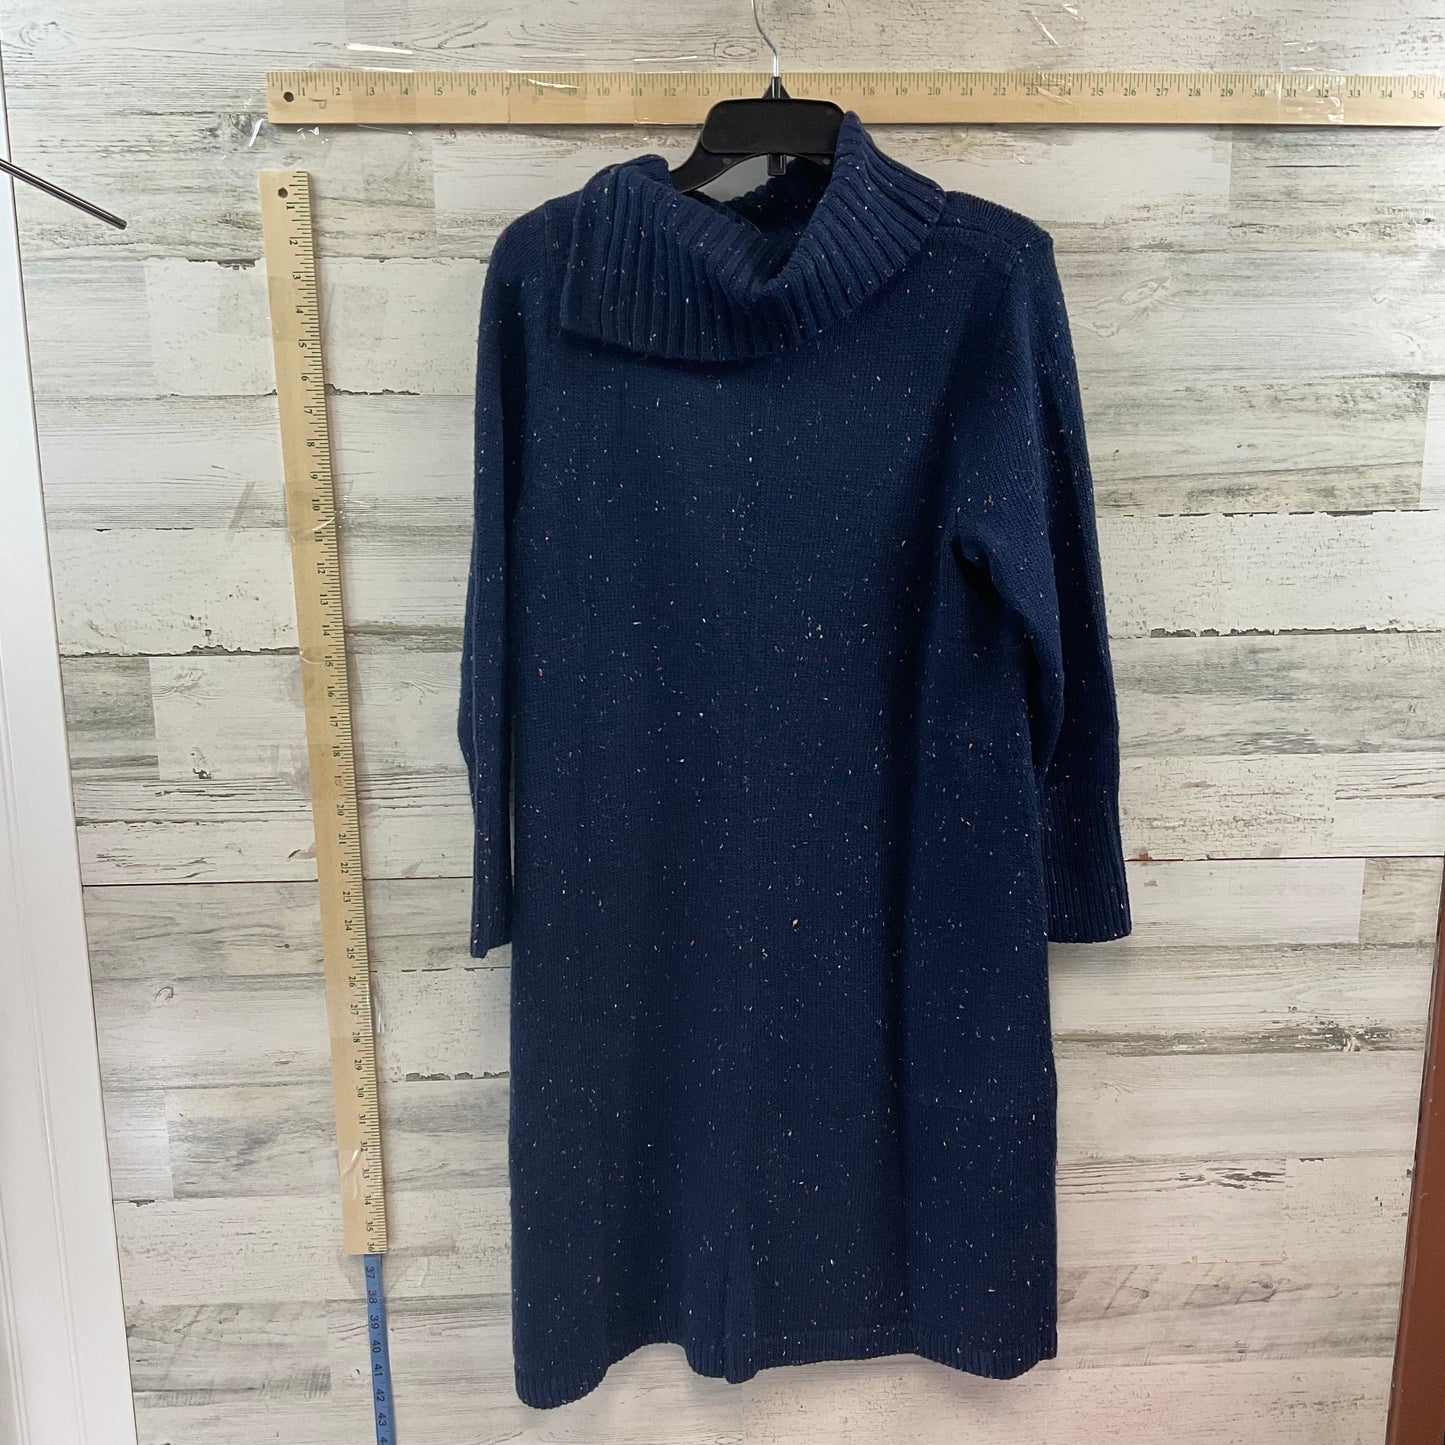 Dress Sweater By Talbots  Size: 1x